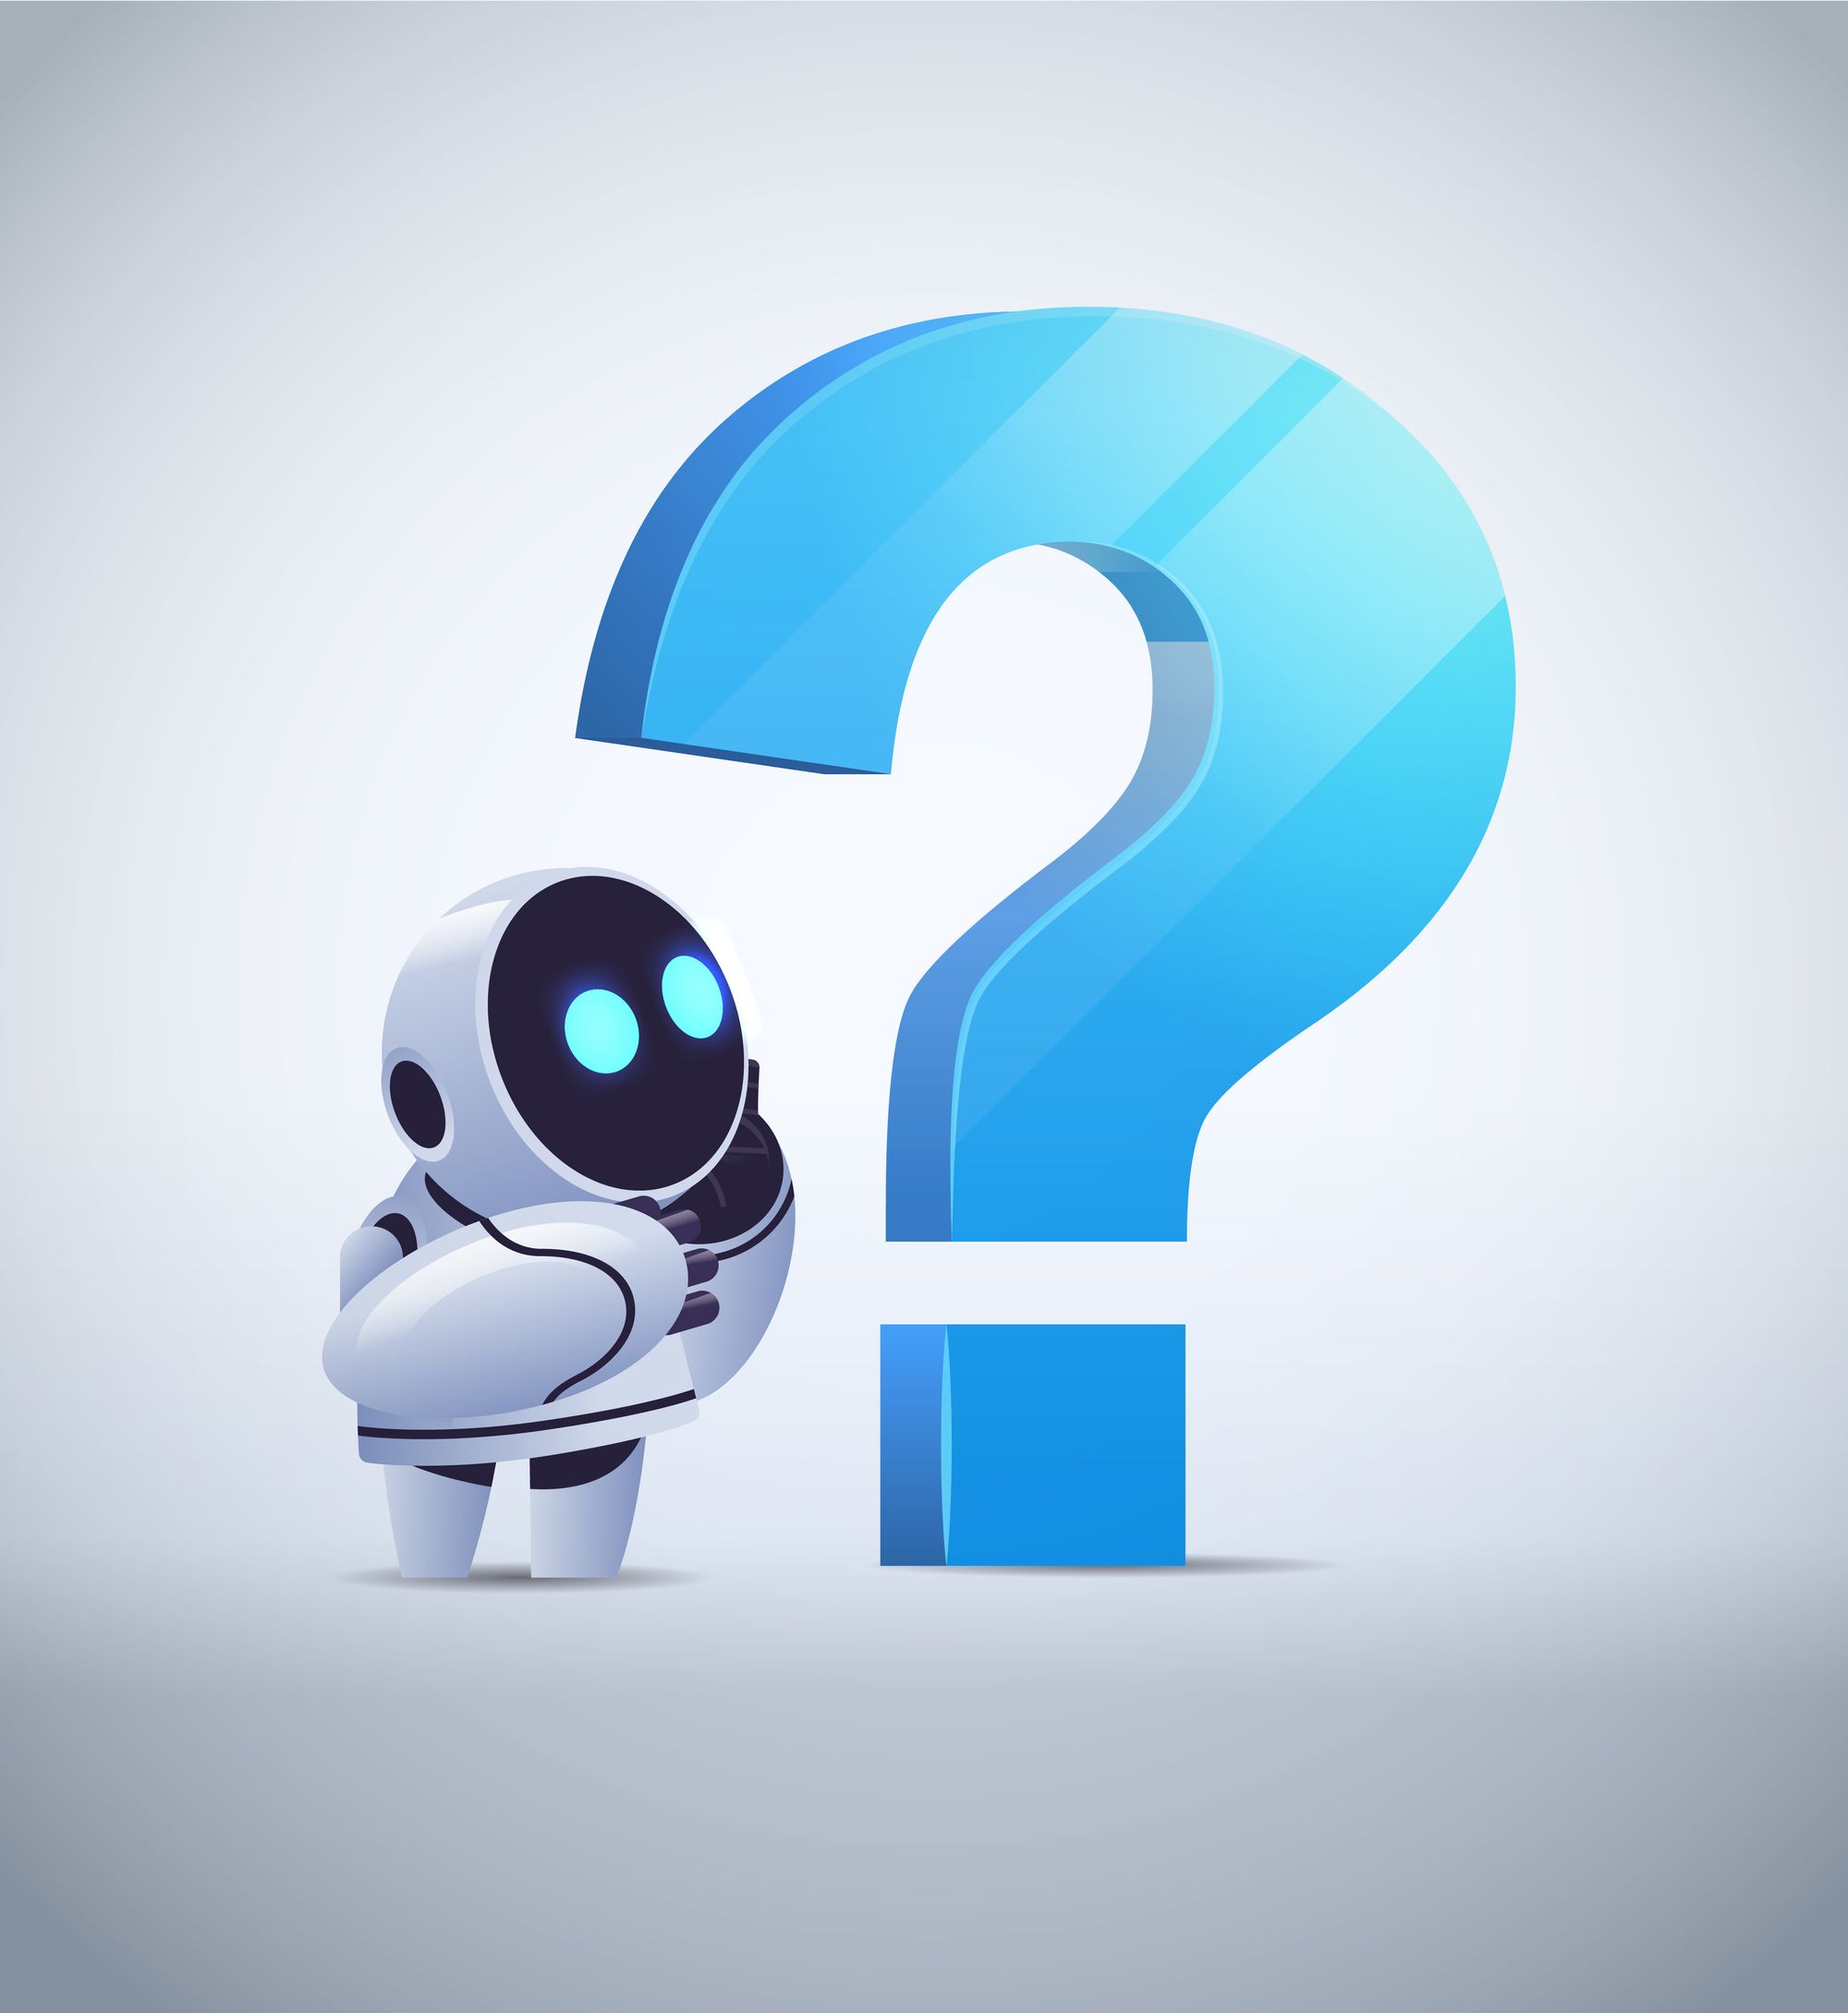 Robot facing a question